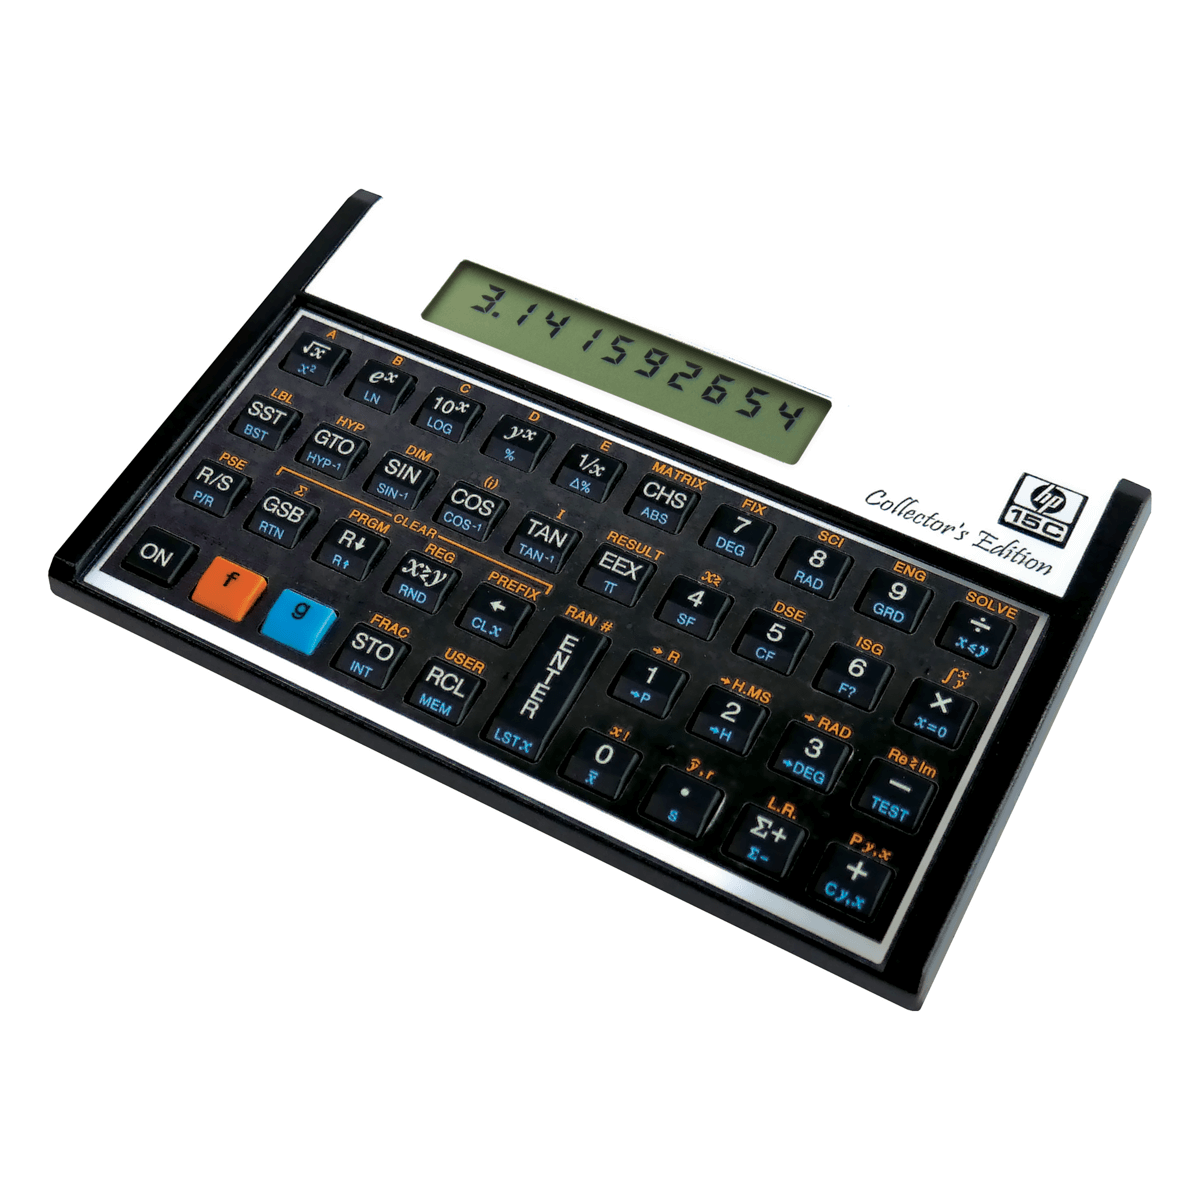 HP 17bII+ Financial Calculator